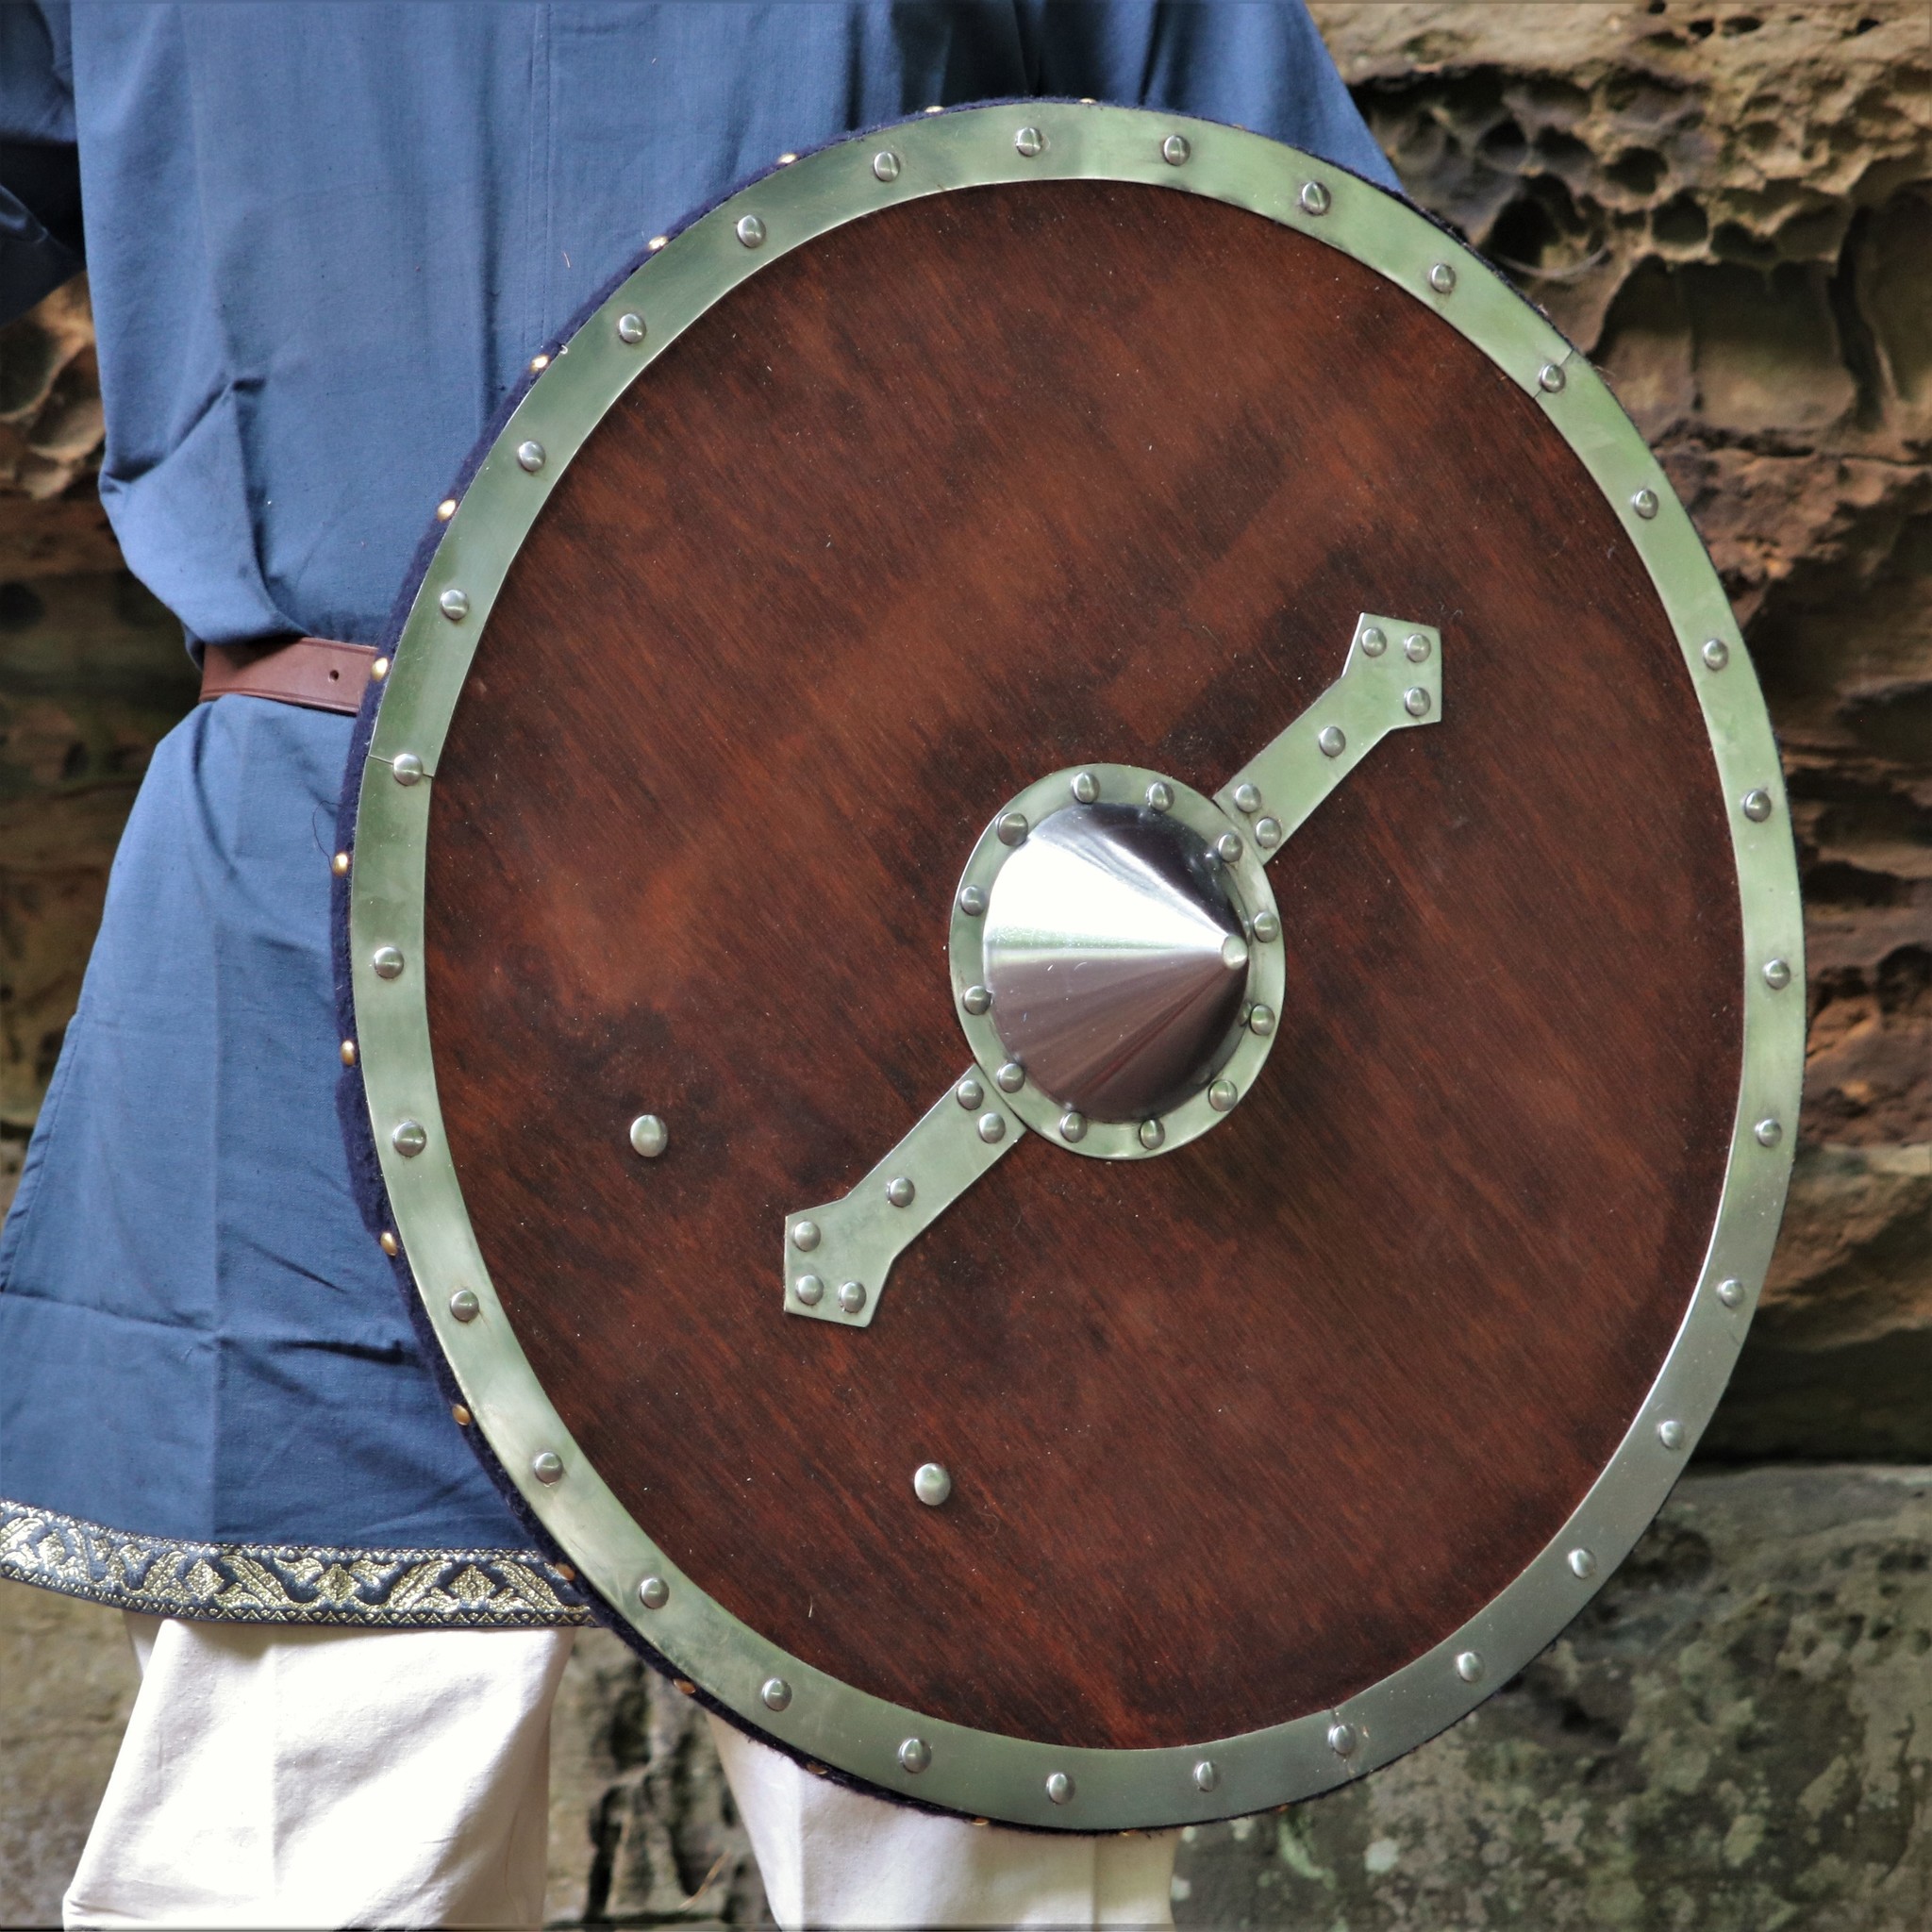 Renaissance Wax - Viking Shield